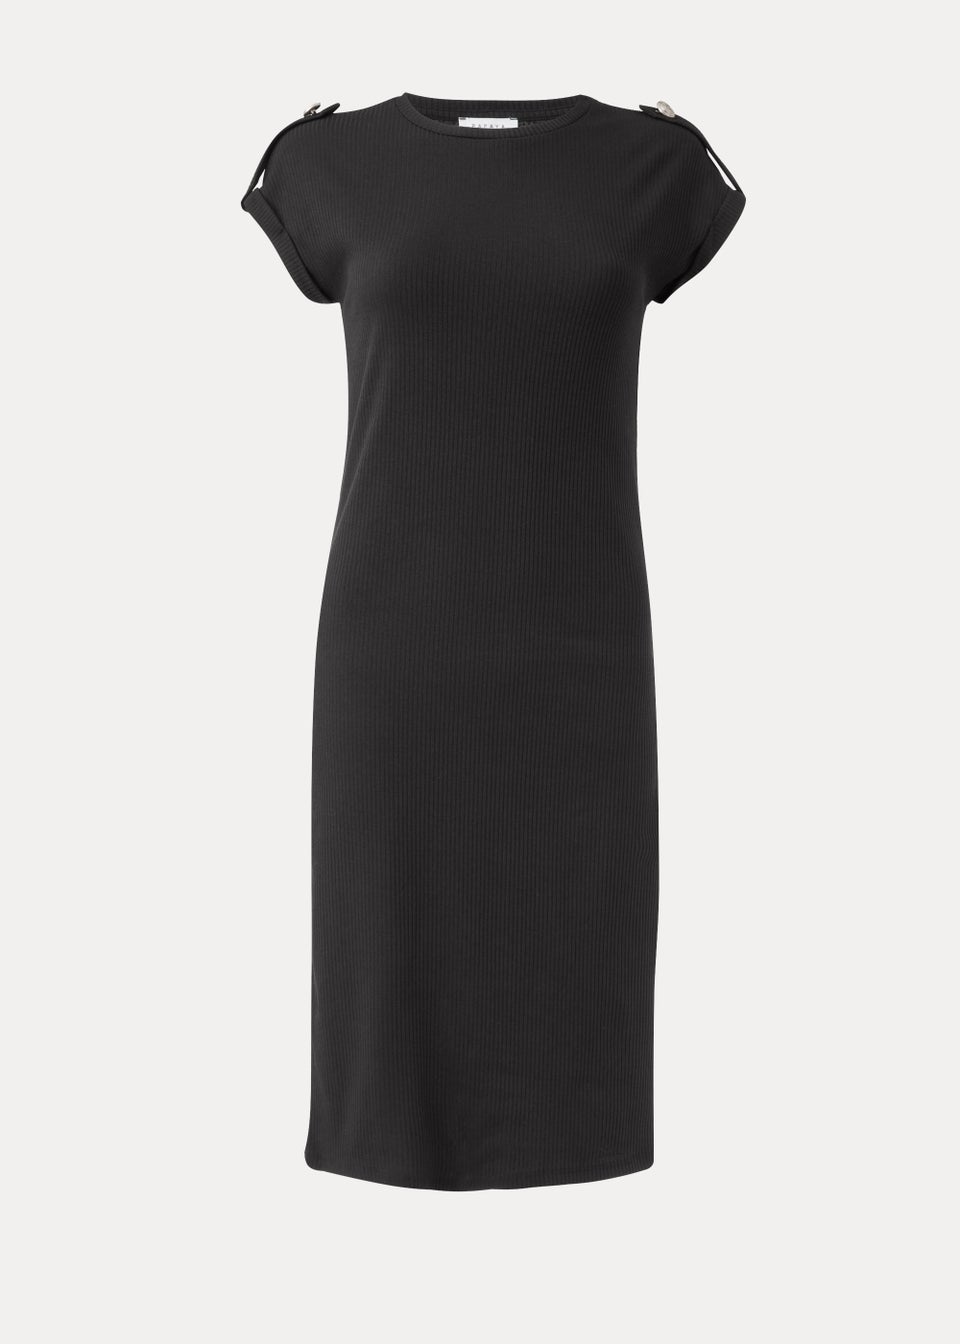 Papaya Petite Black Tab Jersey Midi Dress